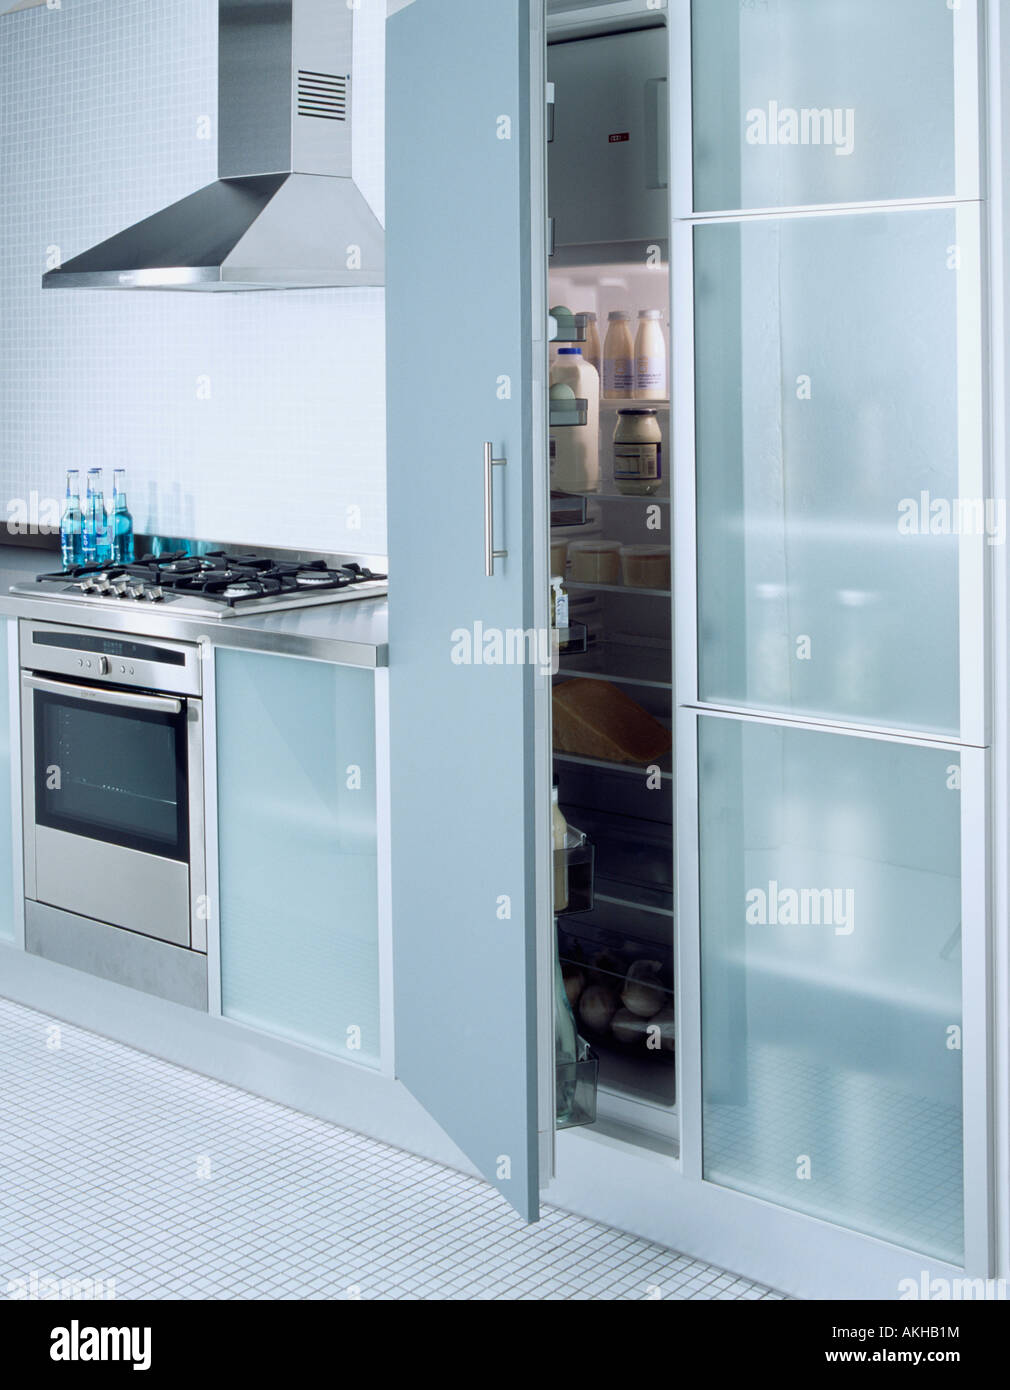 In prossimità di porta aperta su un grande frigorifero in cucina moderna Foto Stock